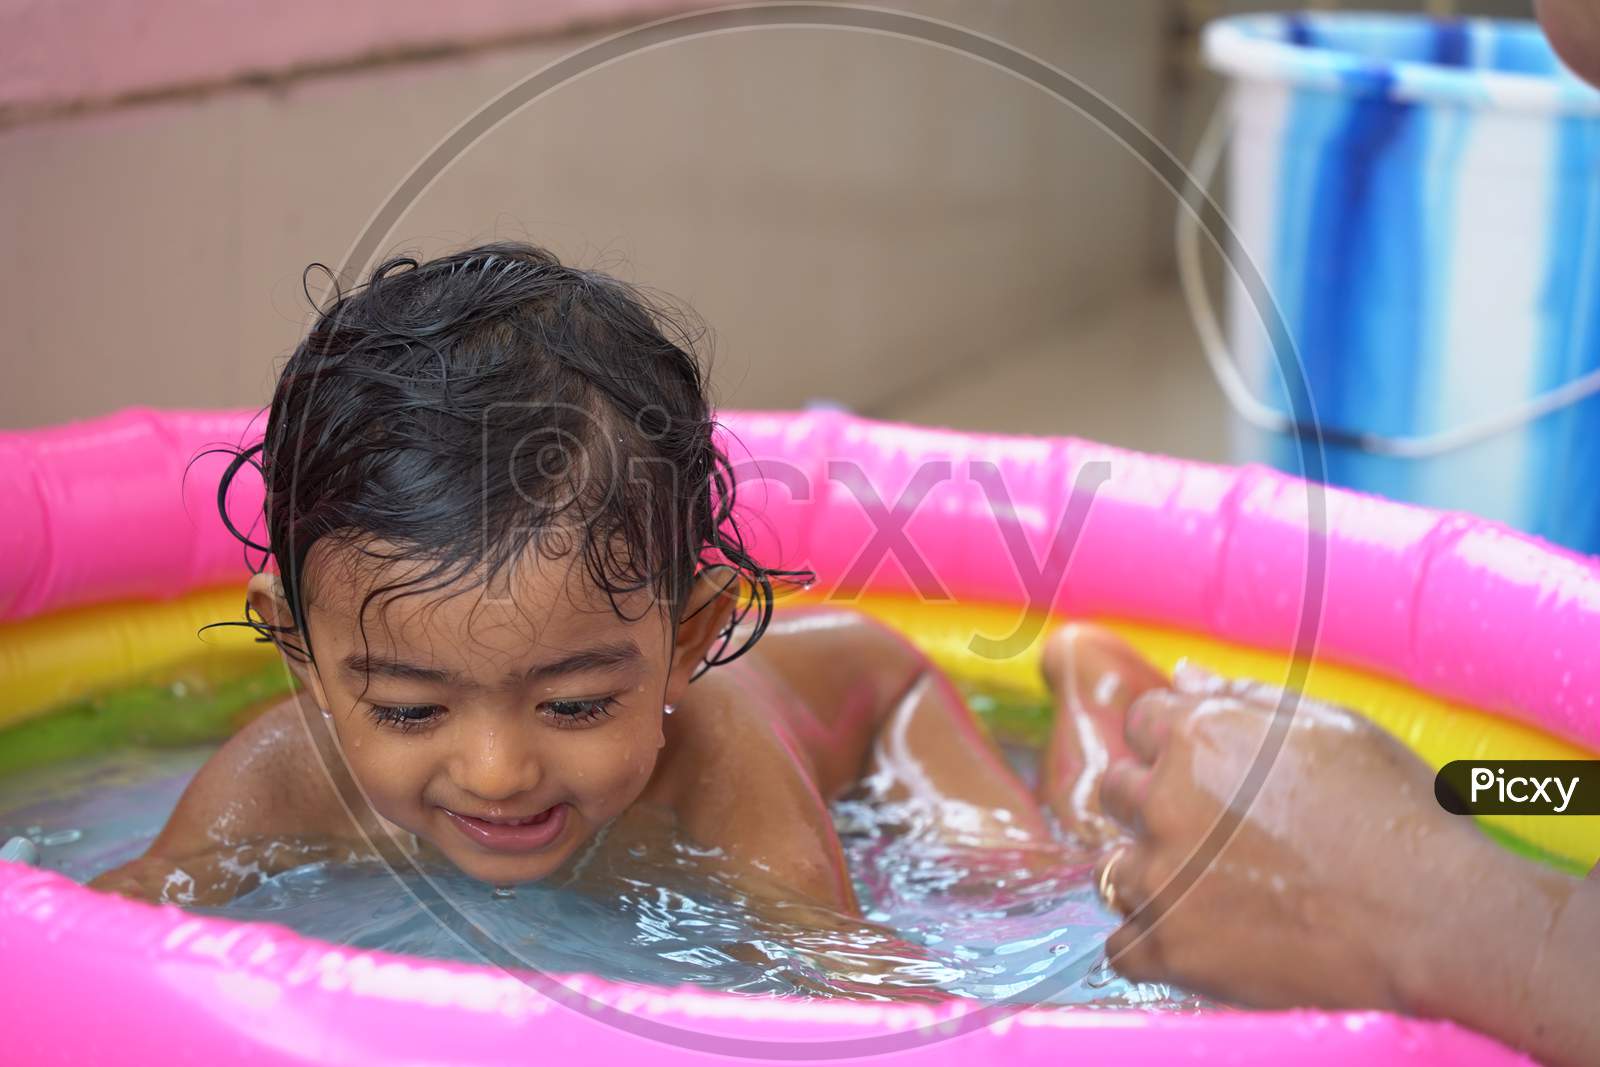 Indian Baby Boy Enjoying Bath In An Inflatable Pool